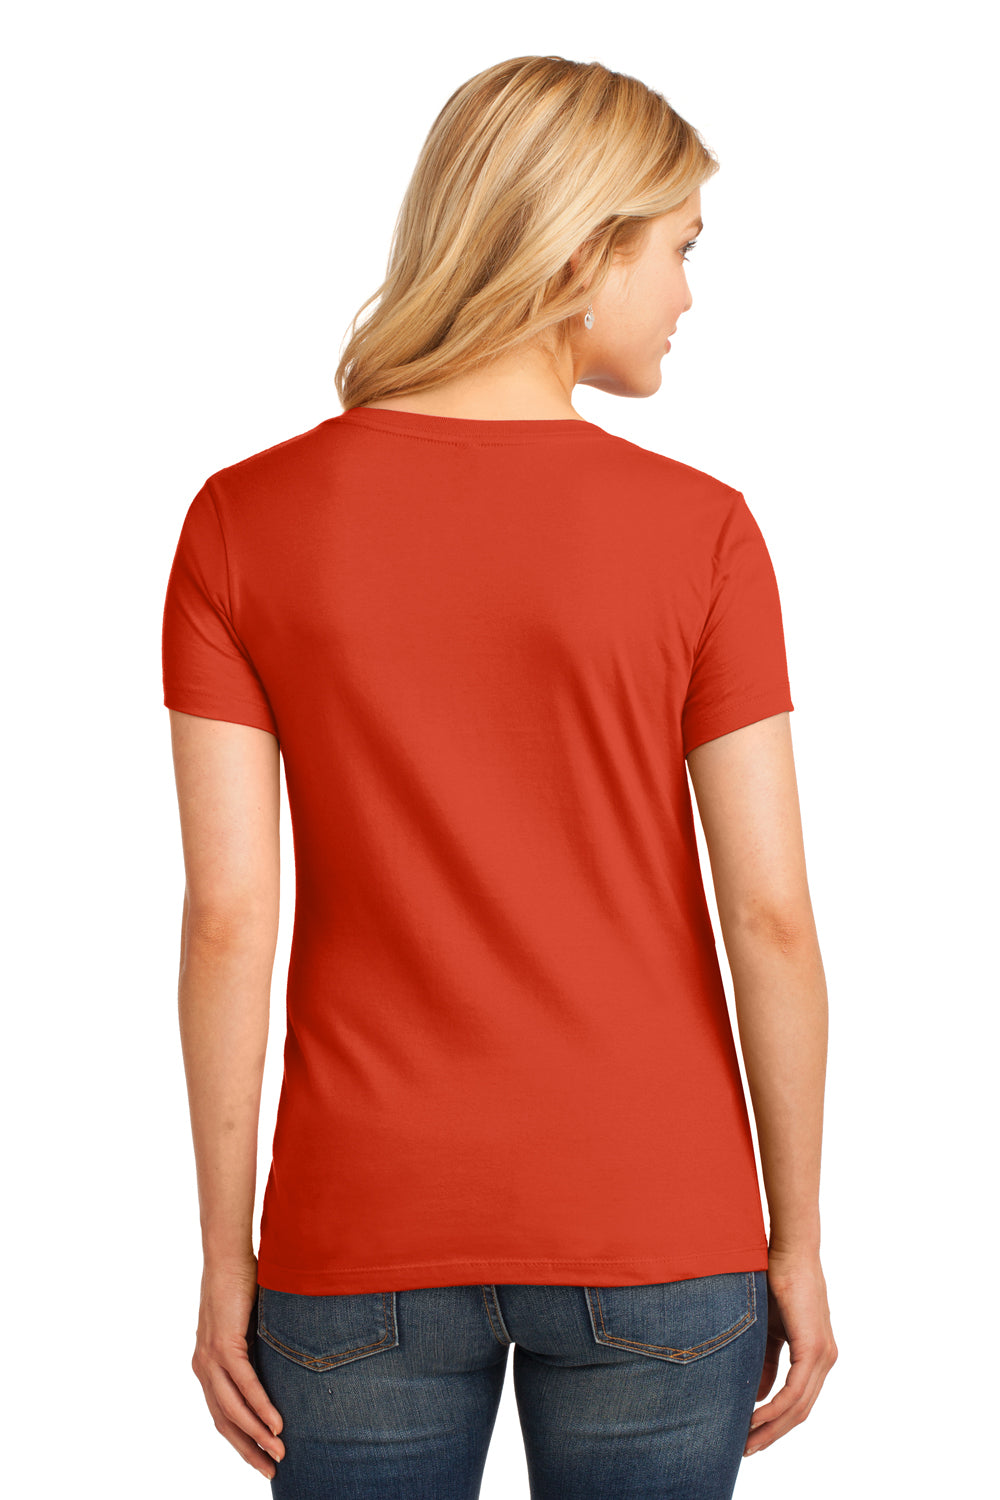 Port & Company LPC54V Womens Core Short Sleeve V-Neck T-Shirt Orange Back